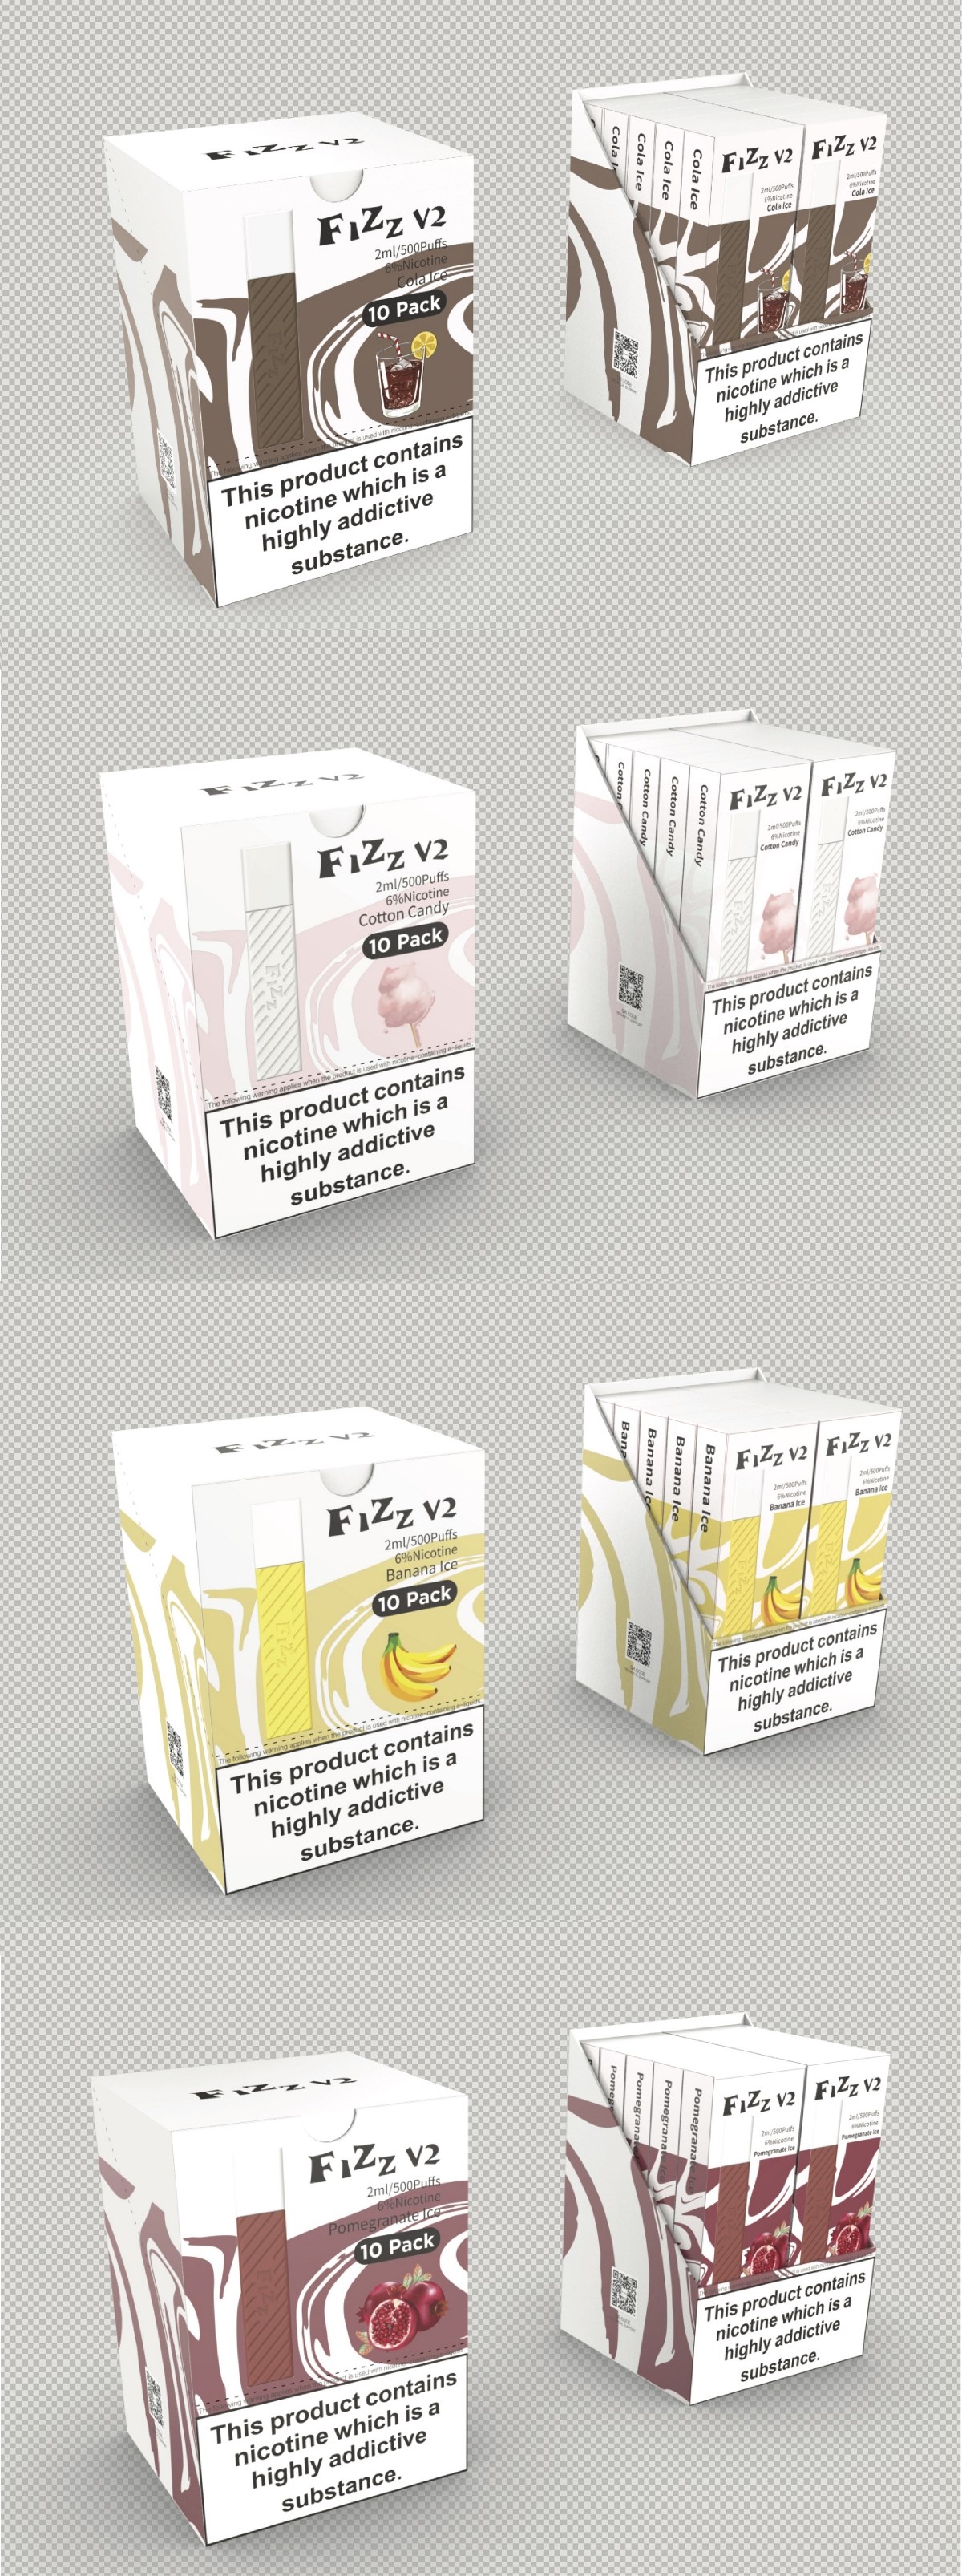 VOOPOO E-liquid Disposable Cigarette Packaging Design